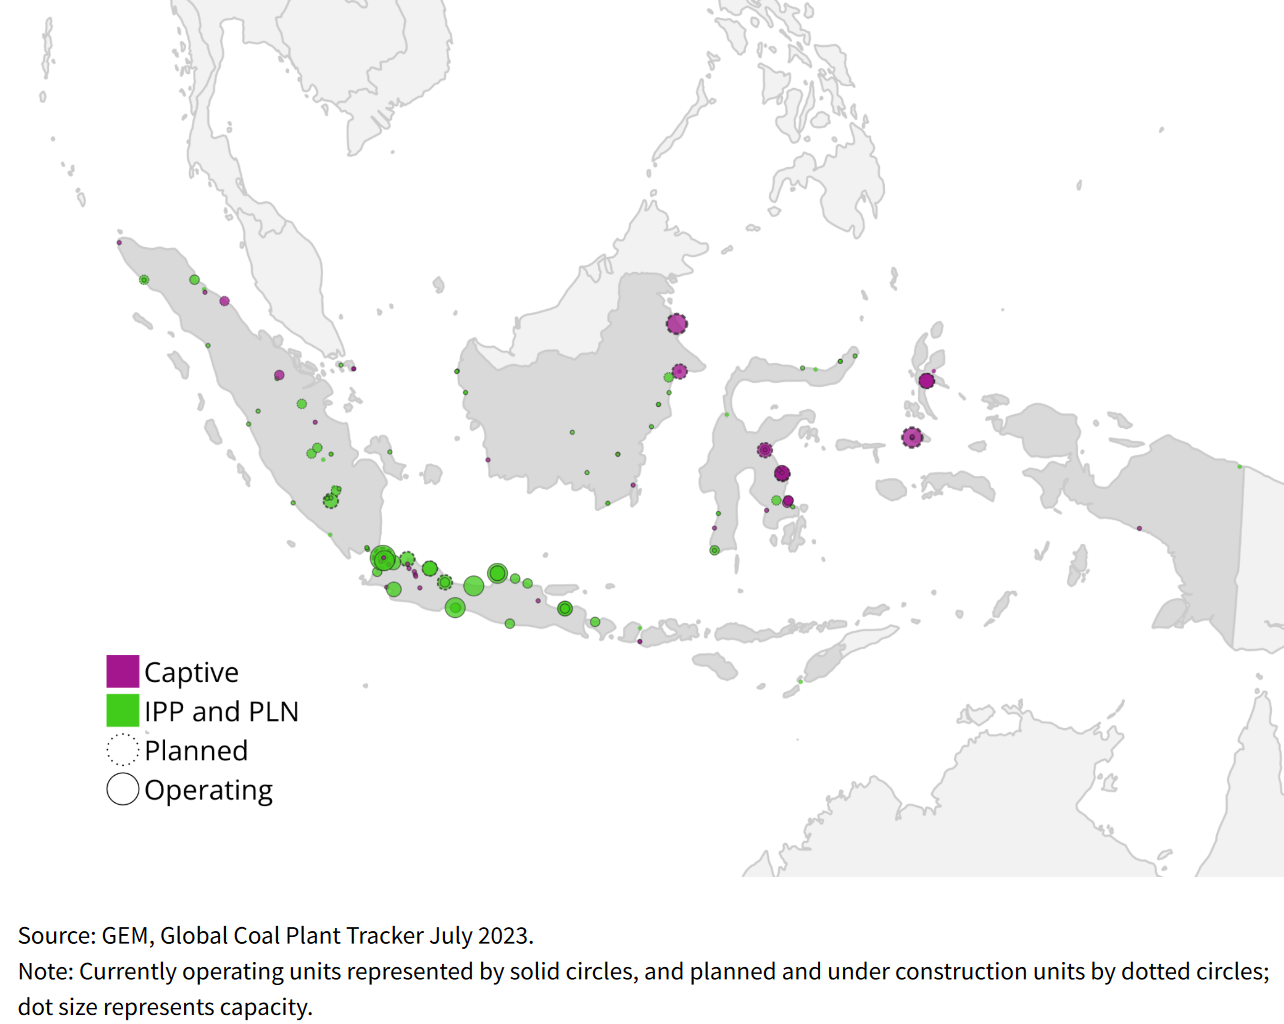 Captive Coal Power Plants in Indonesia